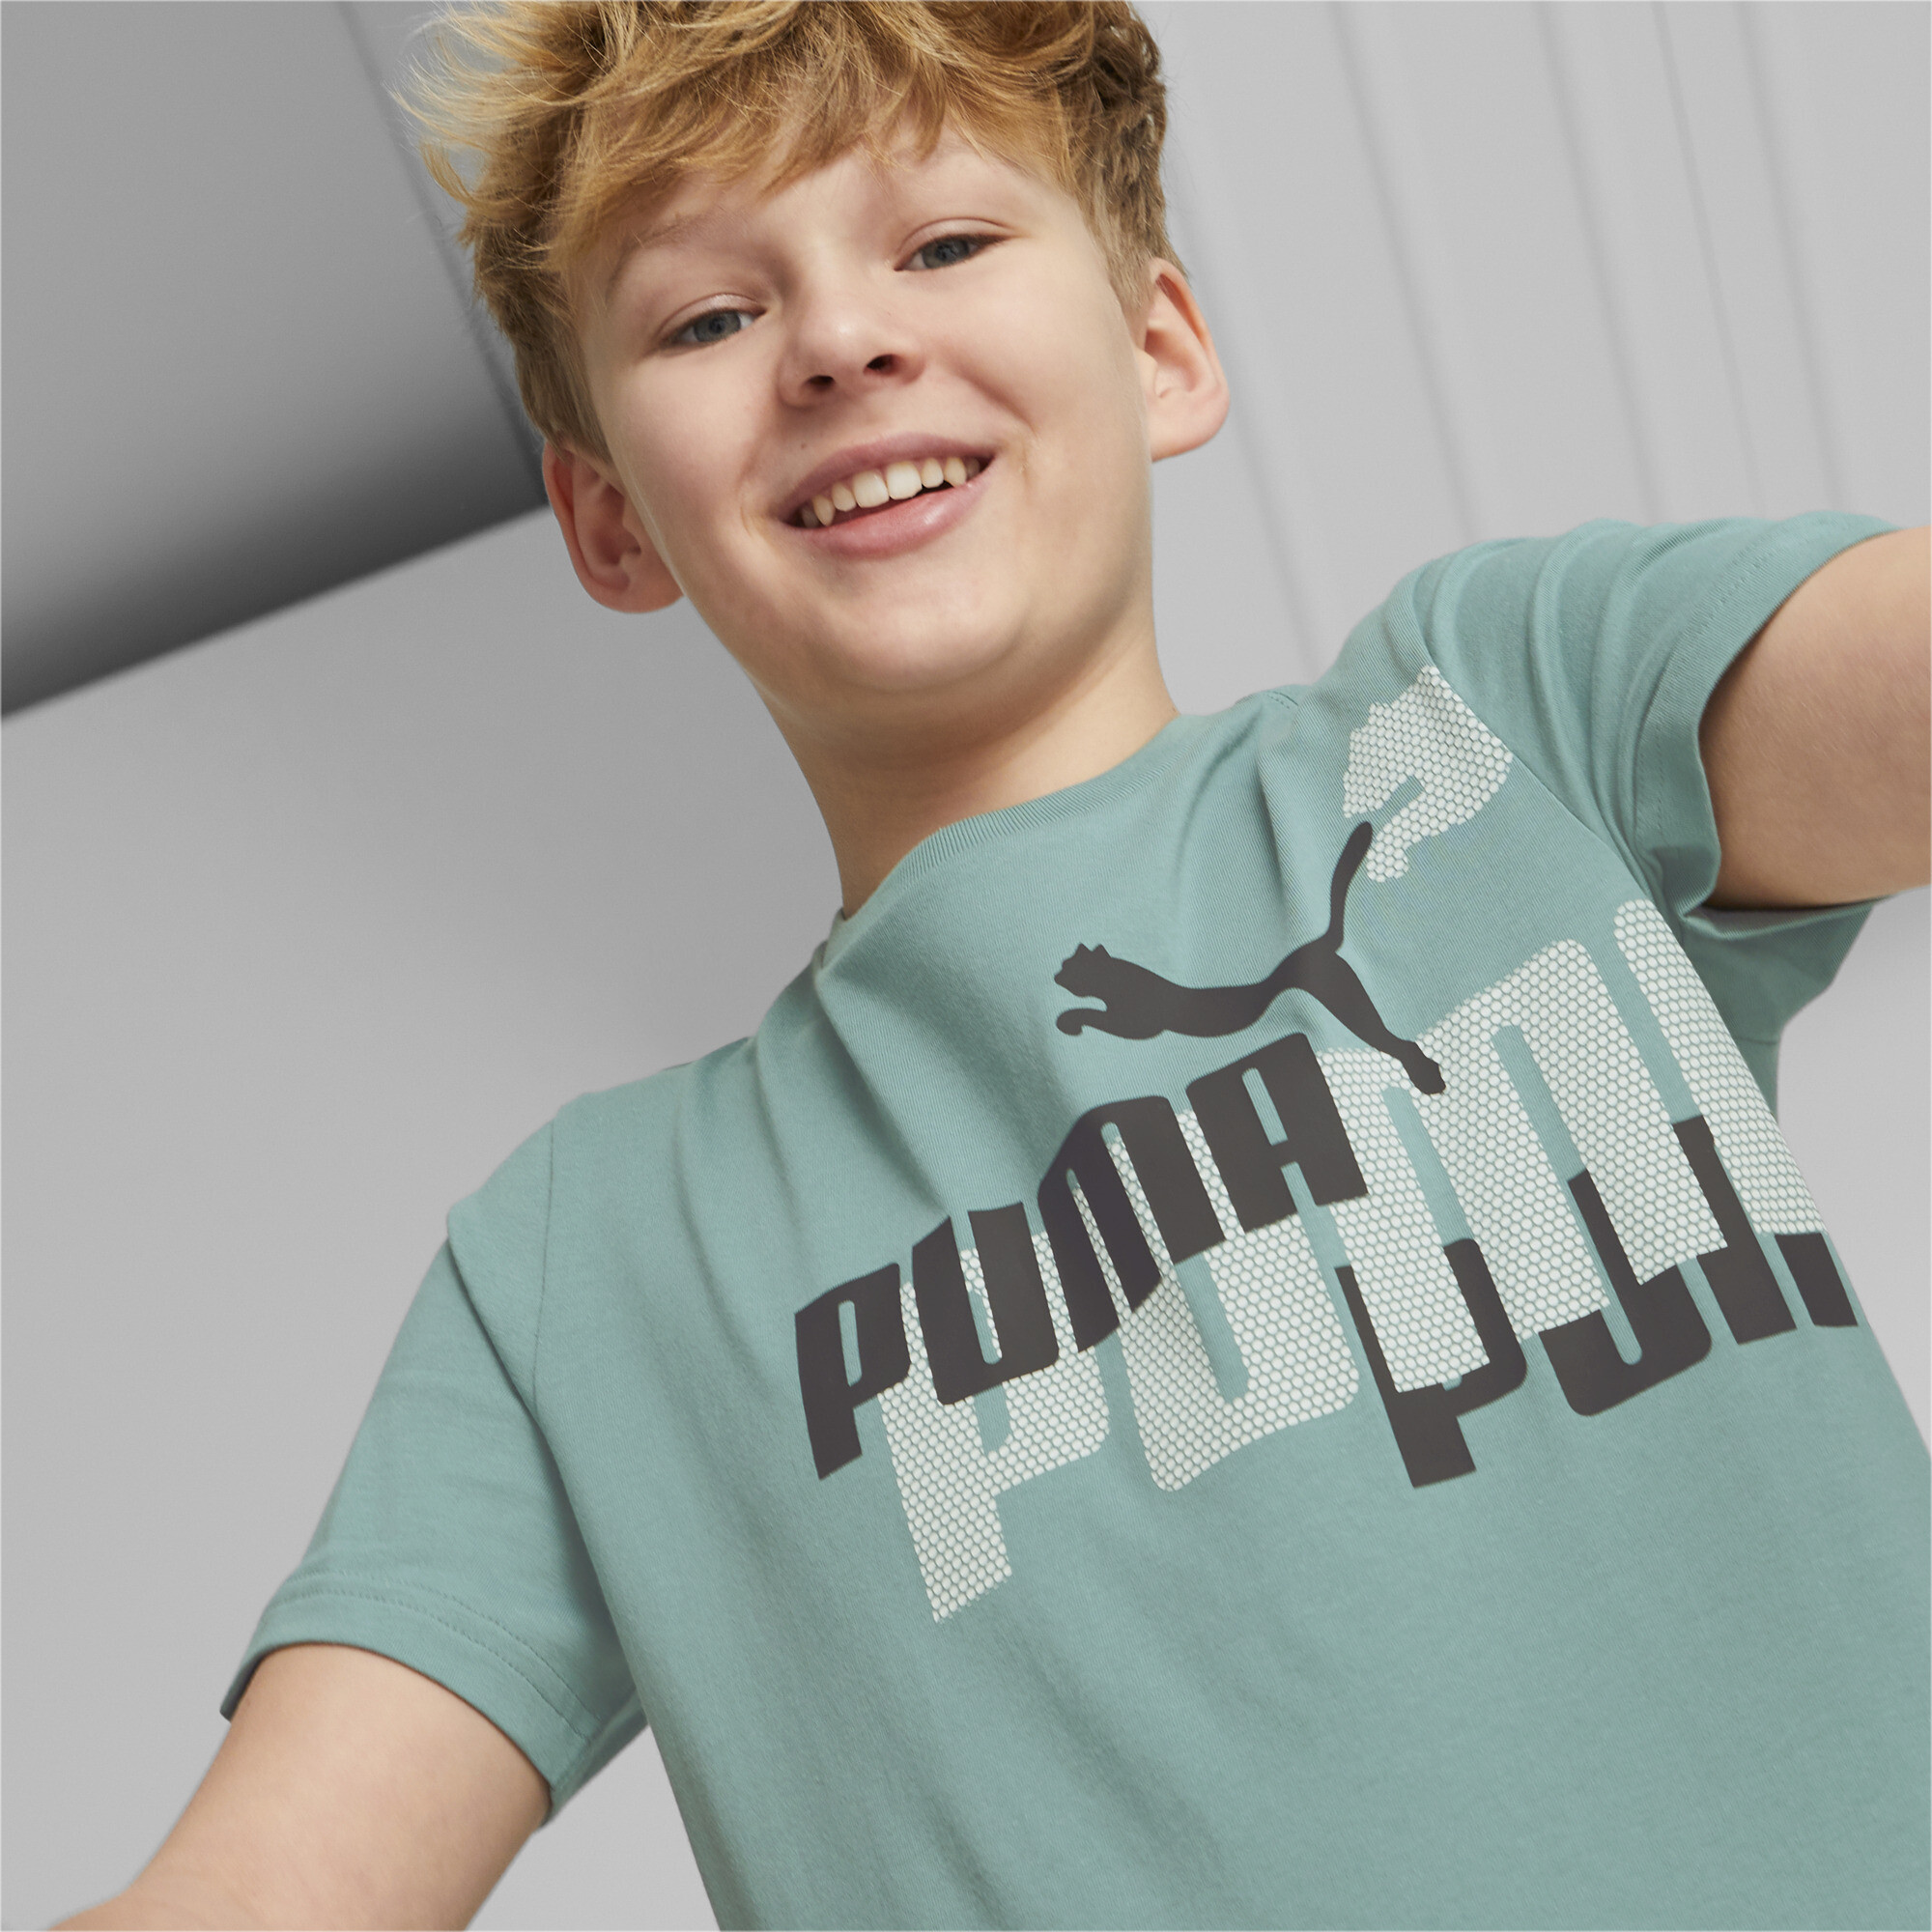 PUMA ESS+ LOGO POWER T-Shirt In Gray, Size 4-5 Youth